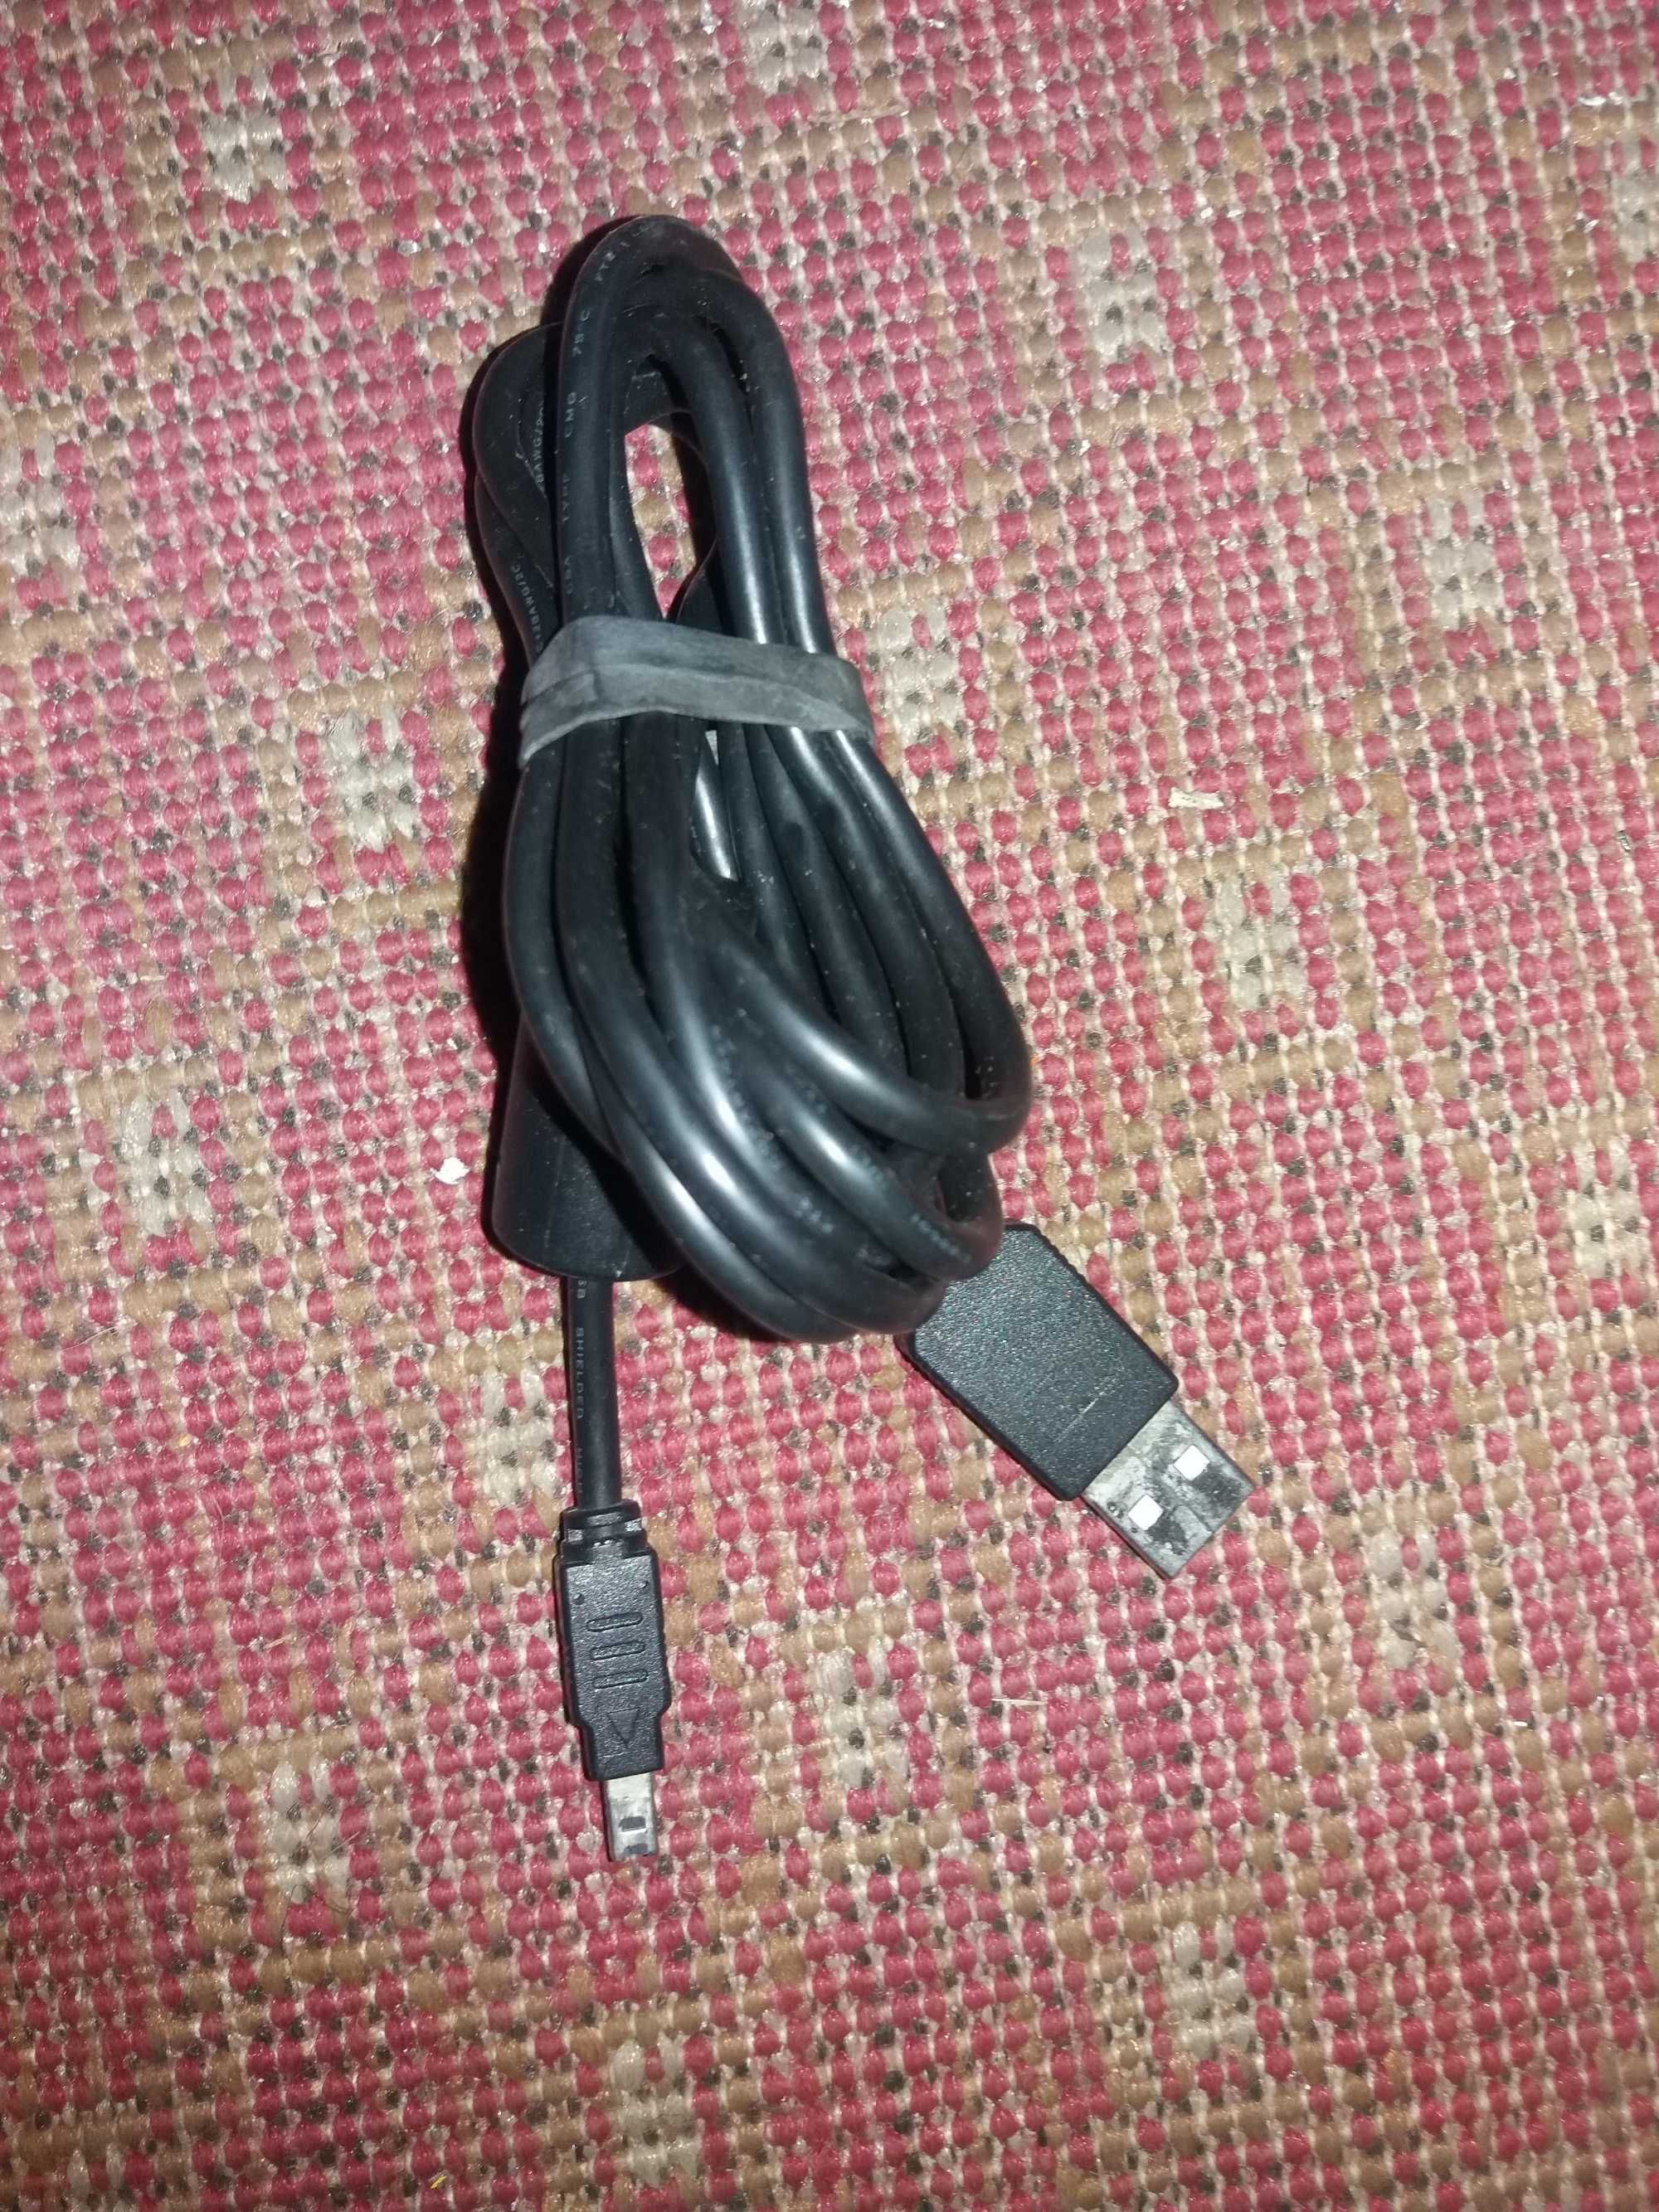 Kabel USB do drukarki